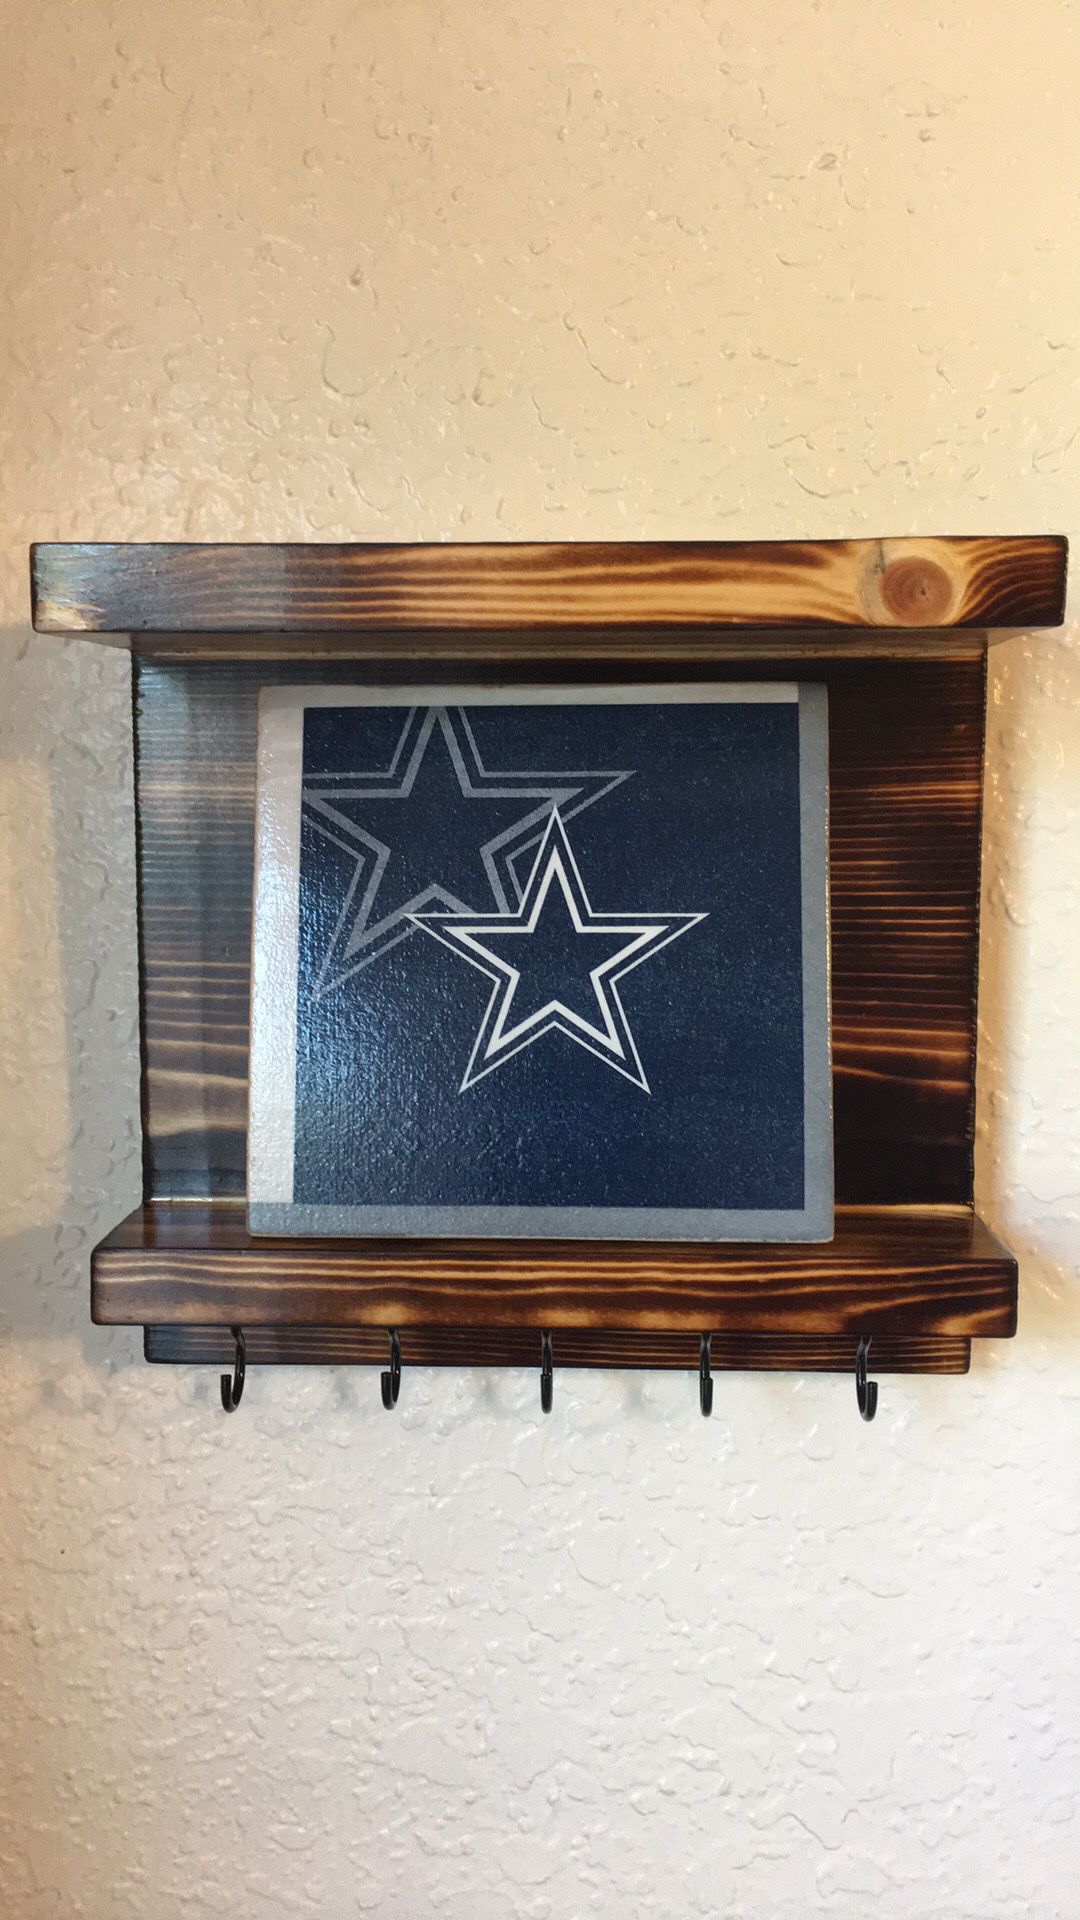 Dallas Cowboys wall decor key holder with shelves rustic handmade 5 hooks